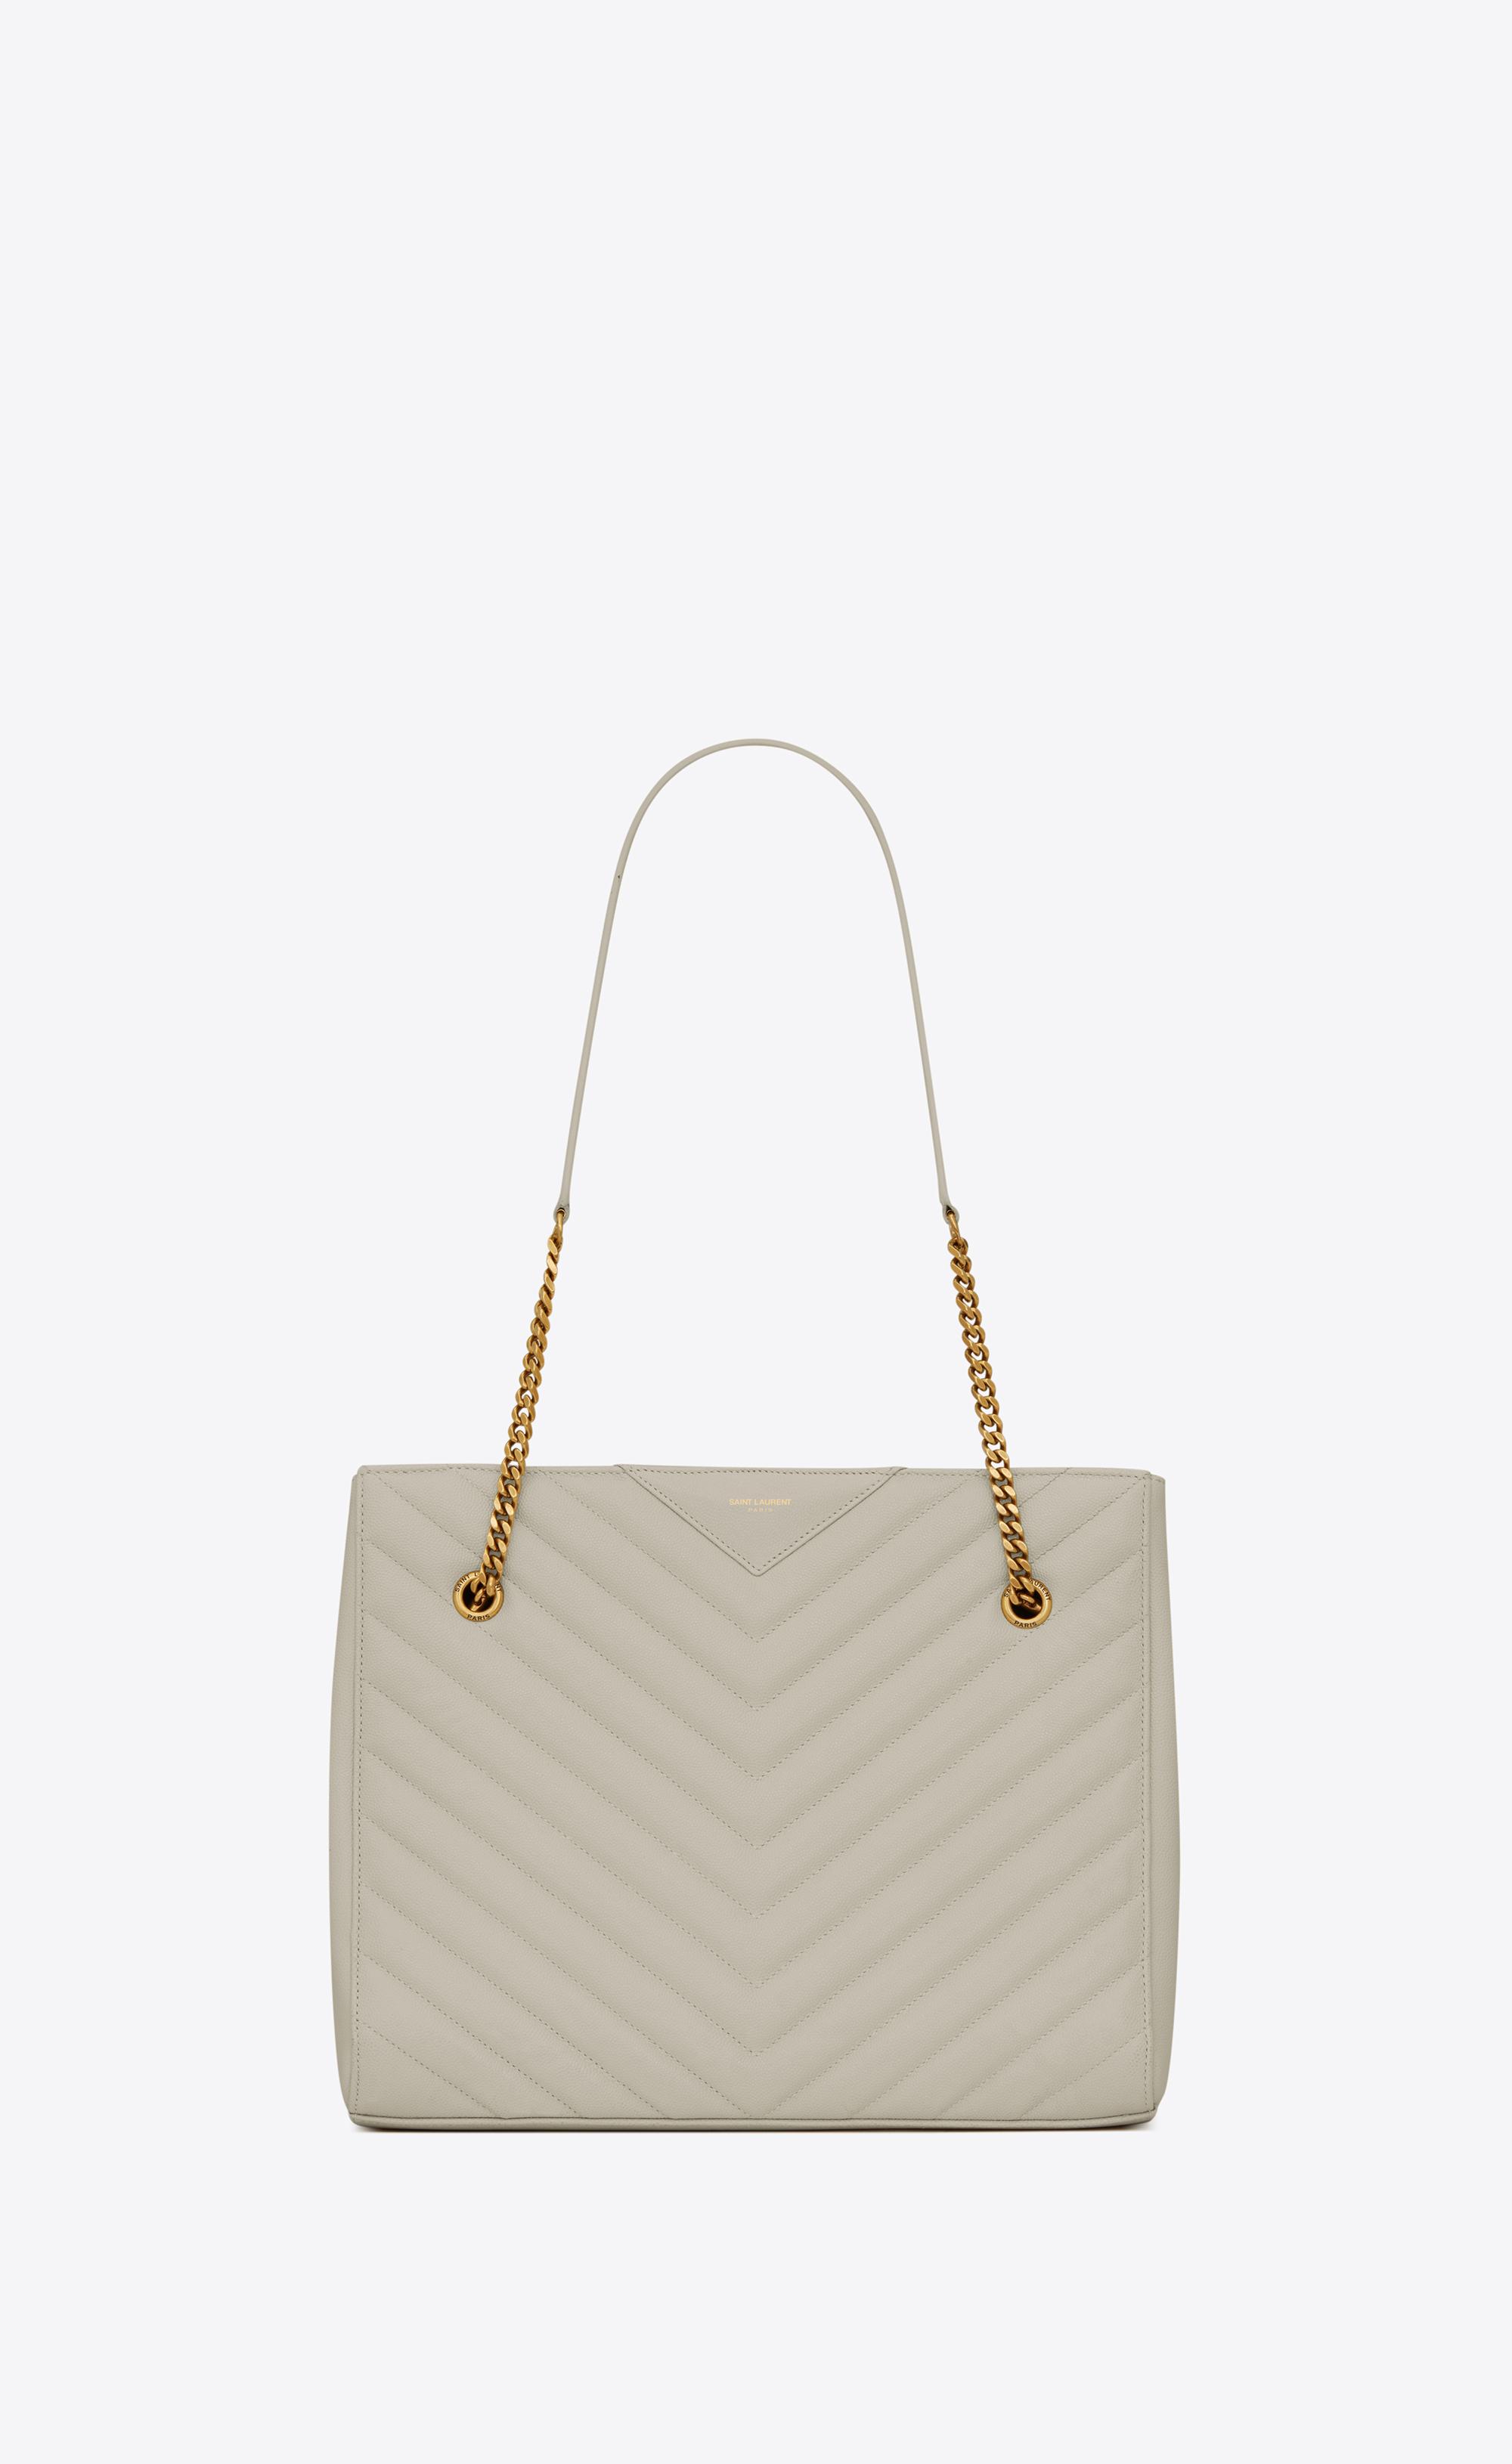 Yves Saint Laurent Tribeca Medium Leather Shoulder Bag White